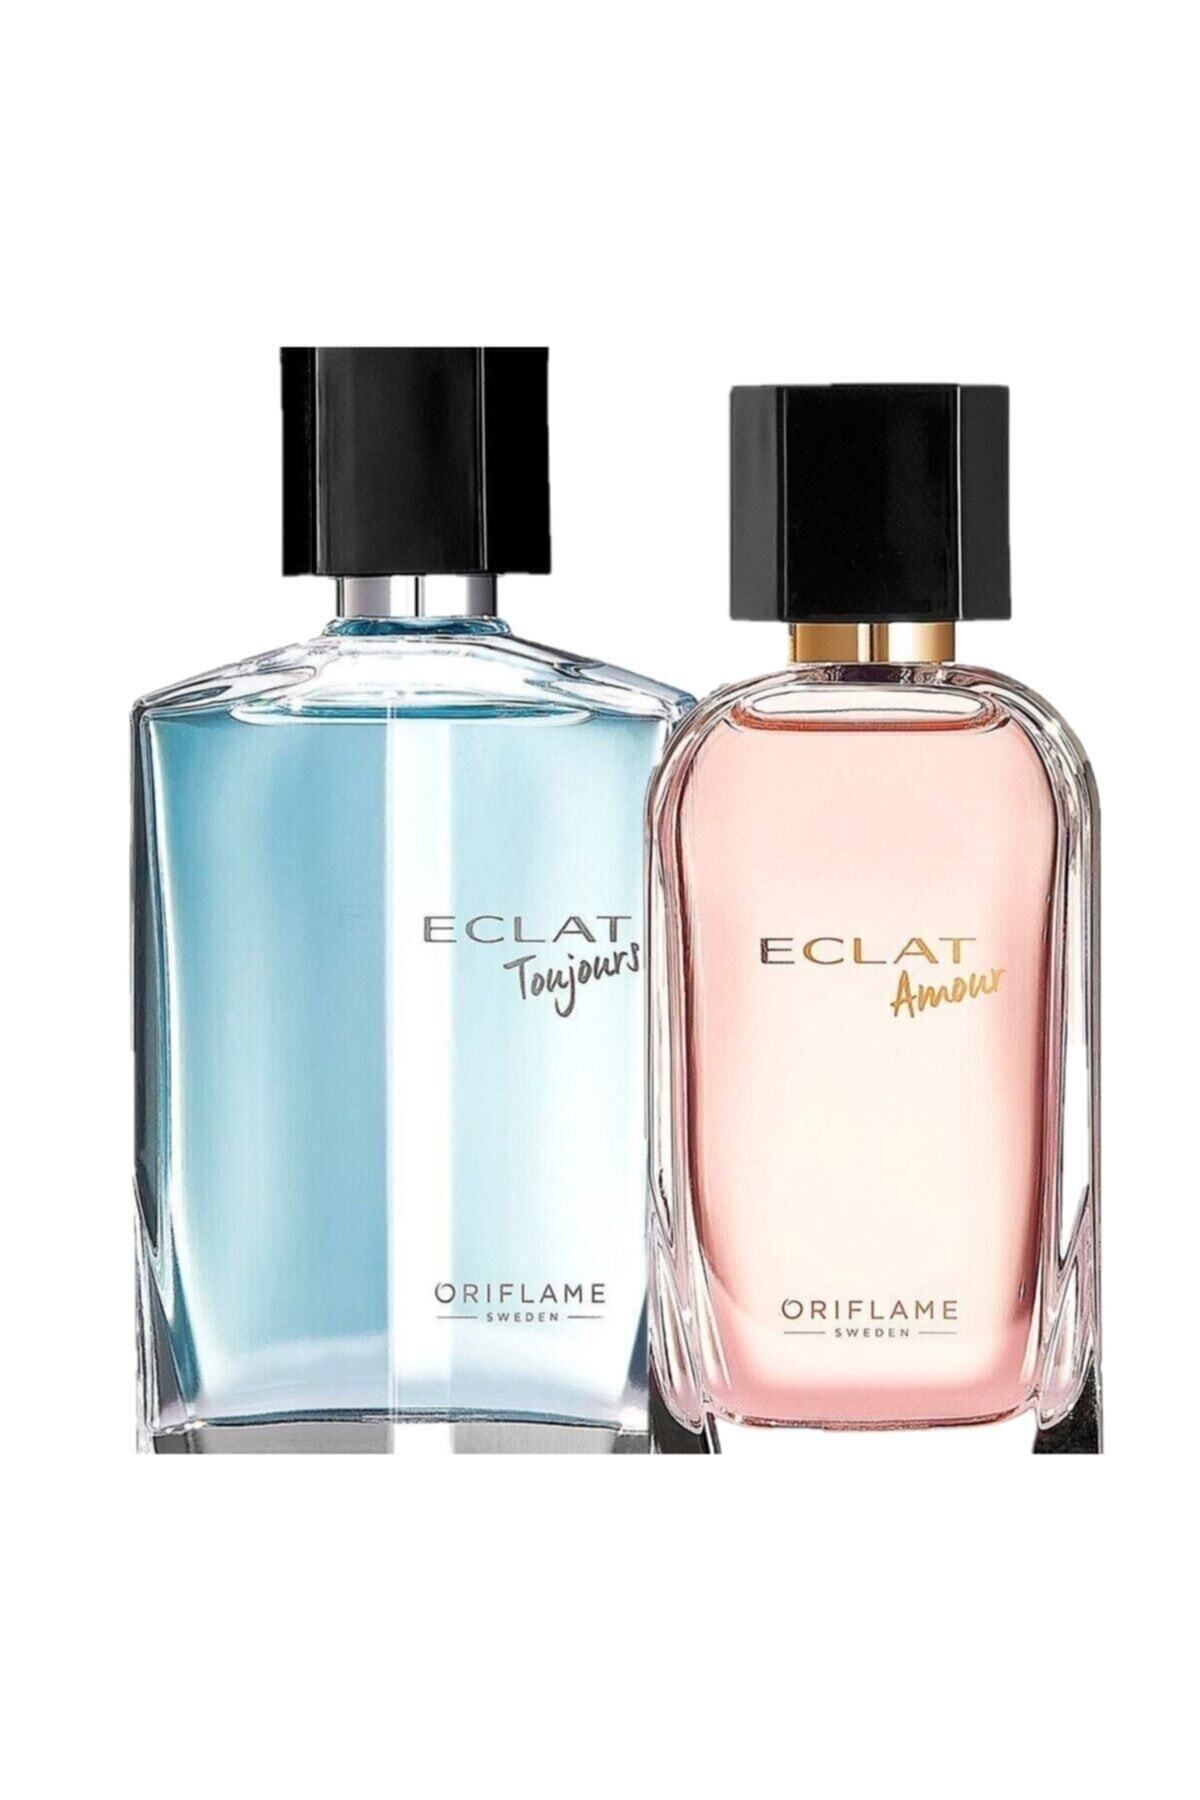 Oriflame Eclat Toujours Edt 75 ml Erkek Parfüm + Eclat Amour Edt 50 ml Kadın Parfüm Set OKD10162